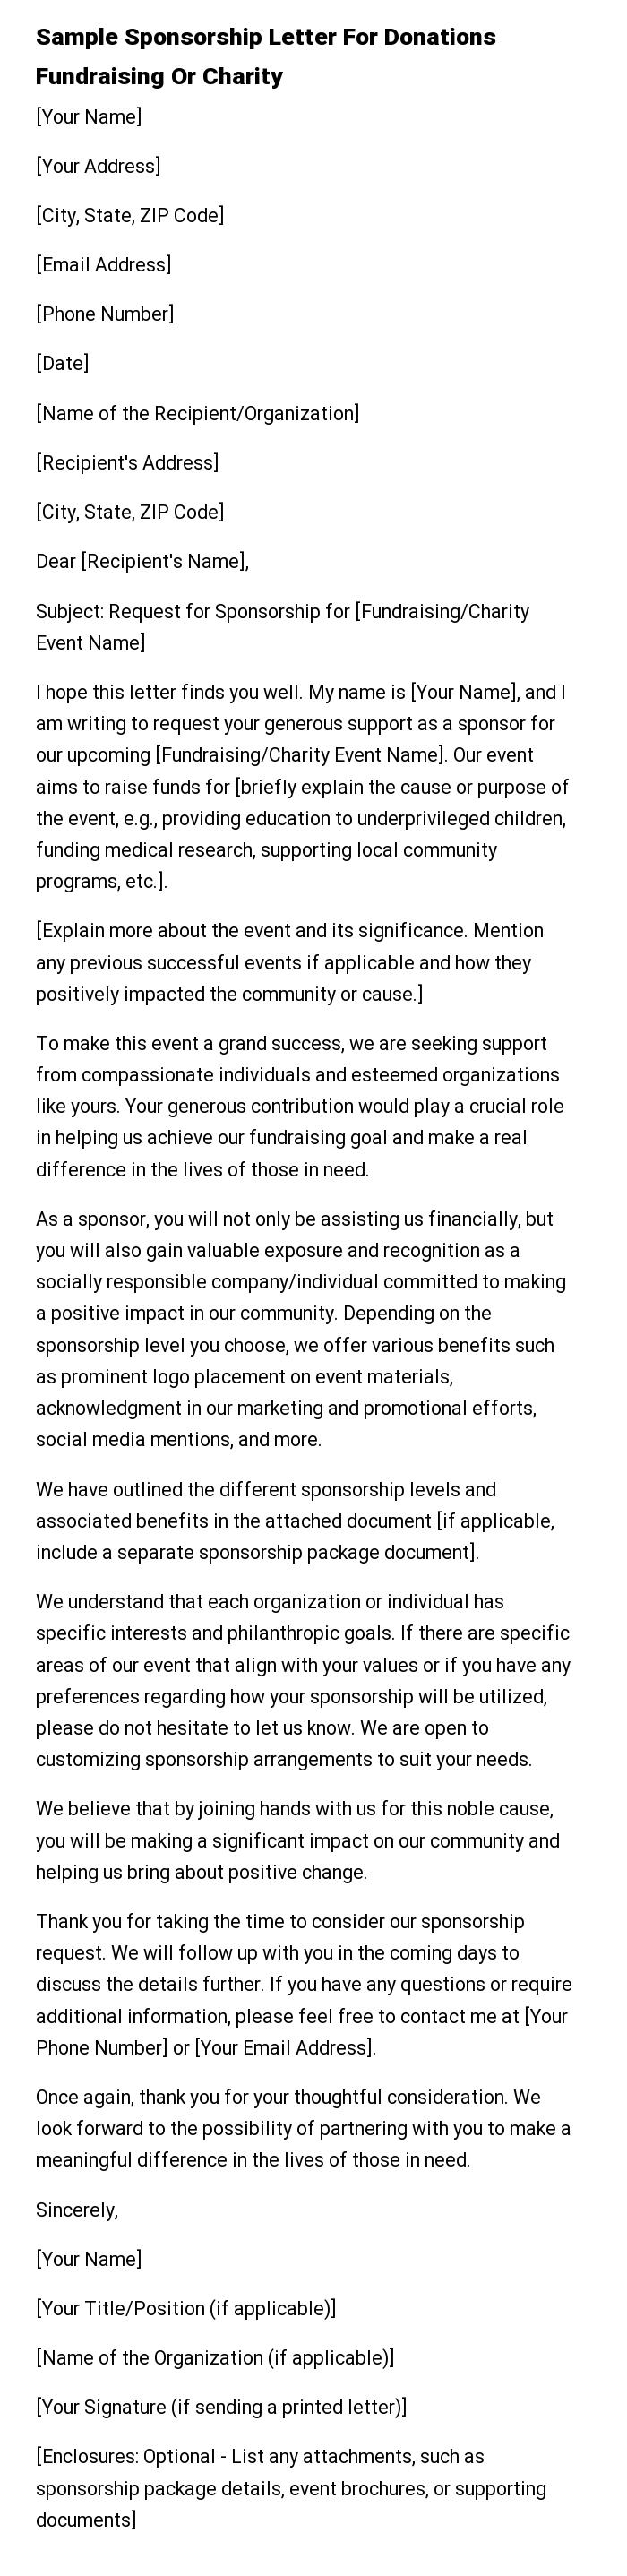 Sample Sponsorship Letter For Donations Fundraising Or Charity